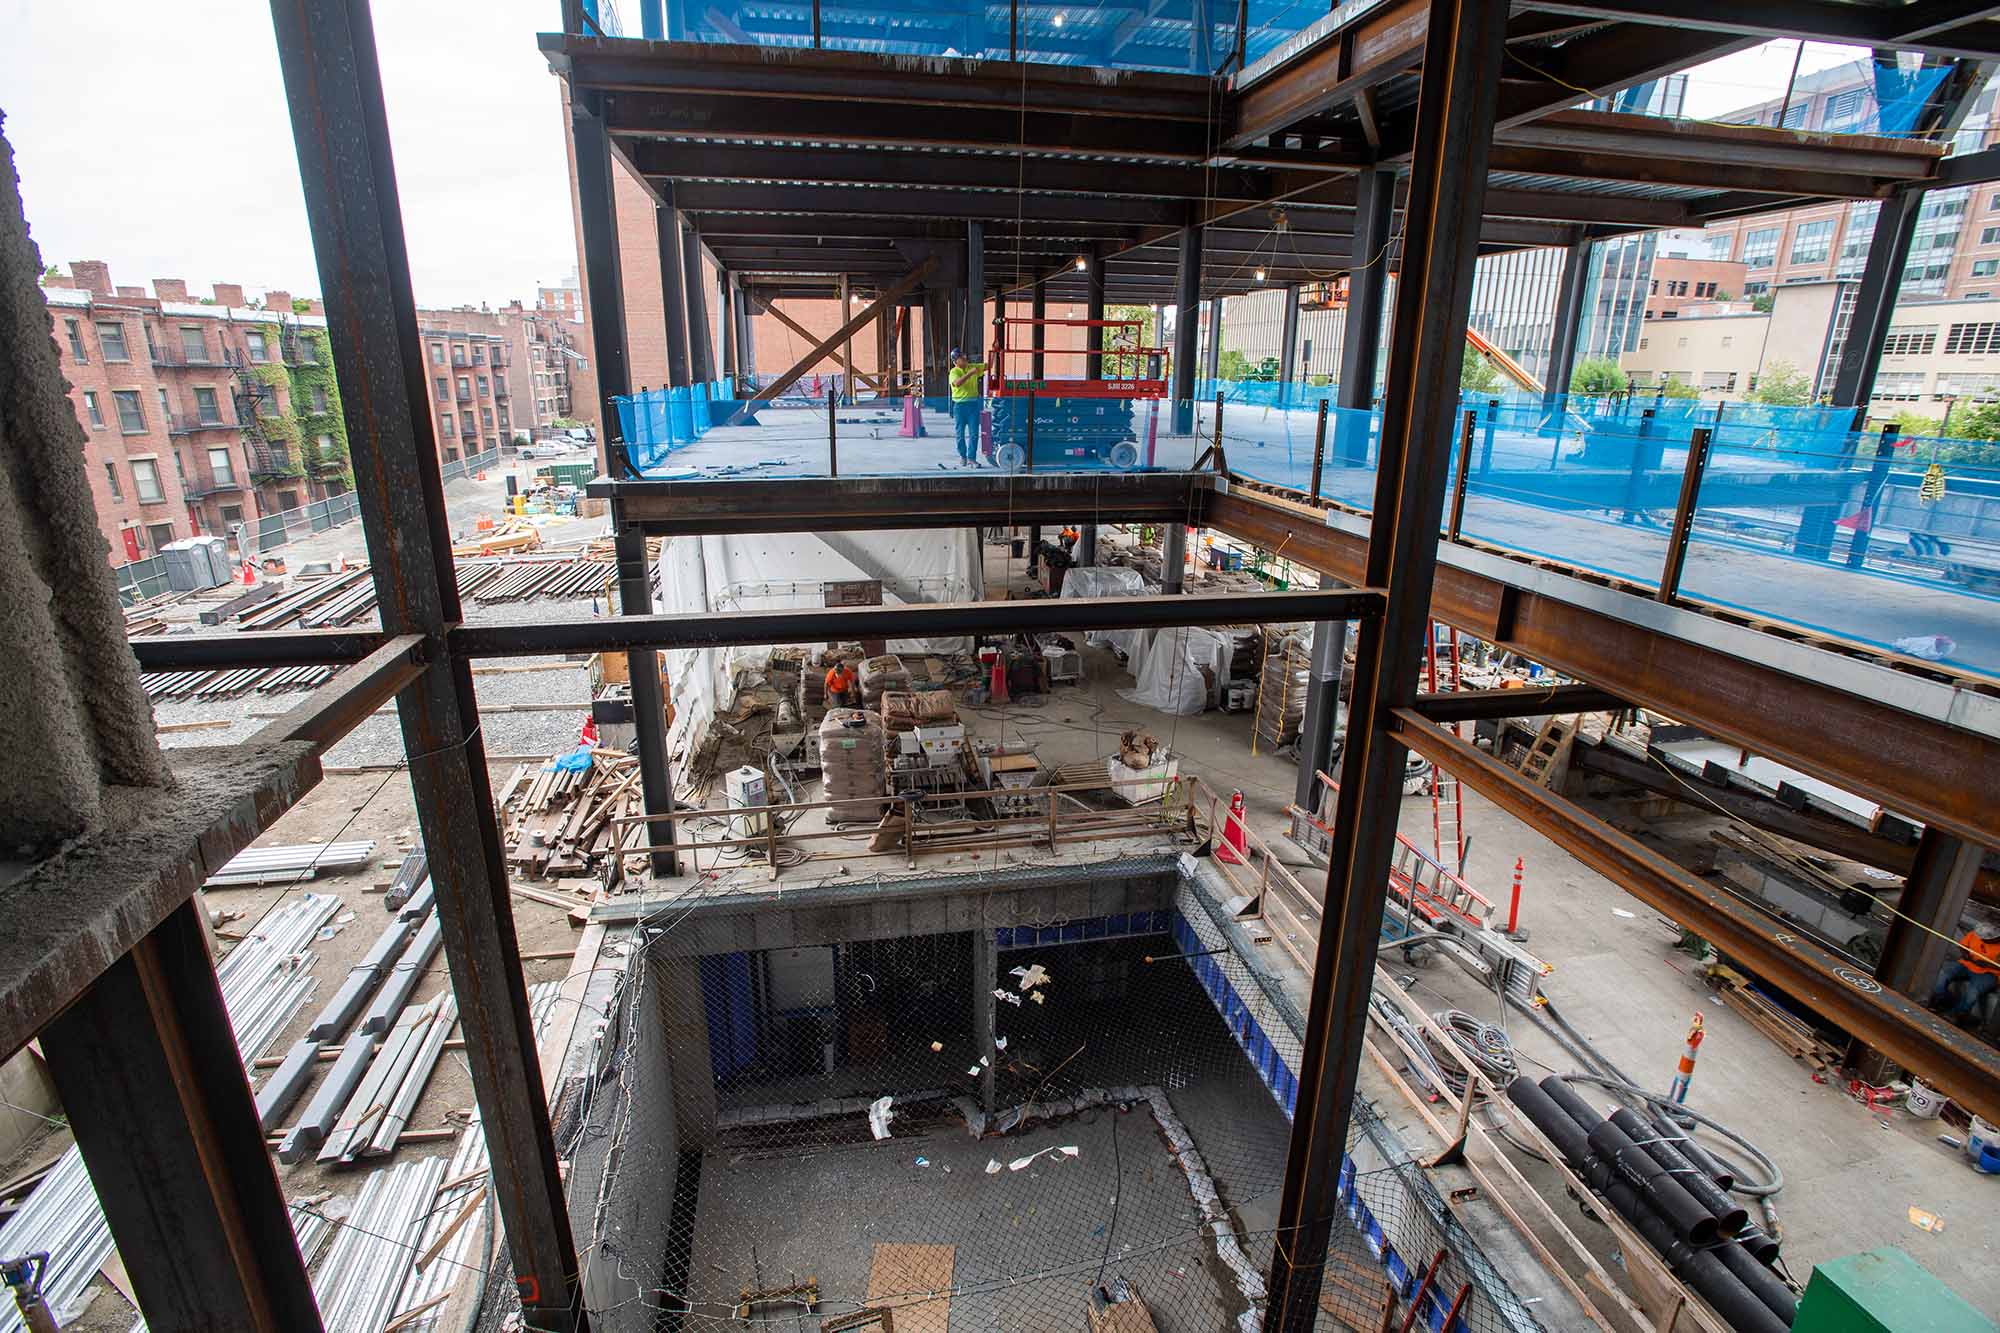 Construction crews building the Boston University Center for Computing & Data Sciences